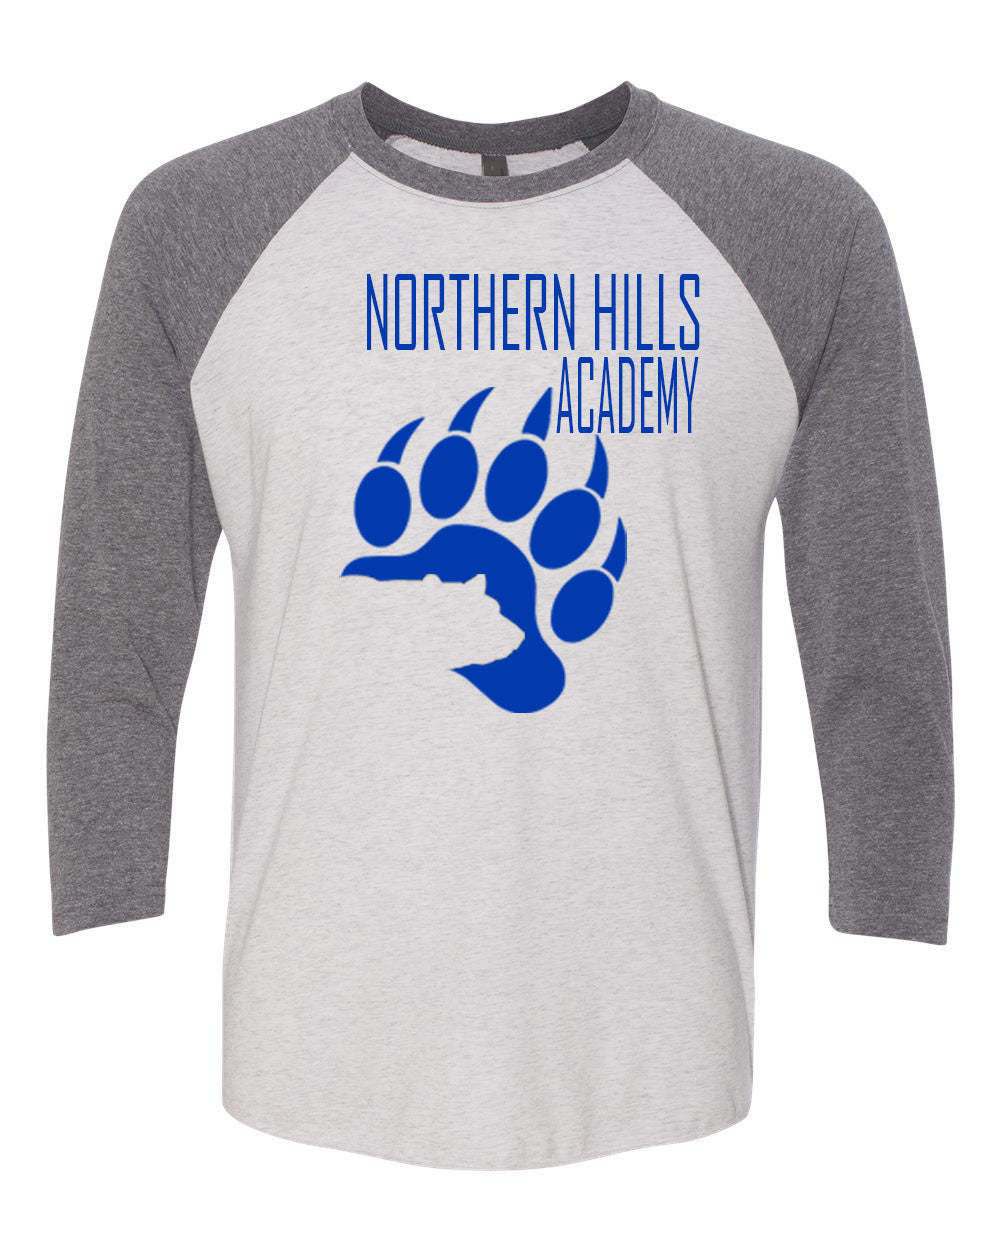 Northern Hills design 3 raglan shirt